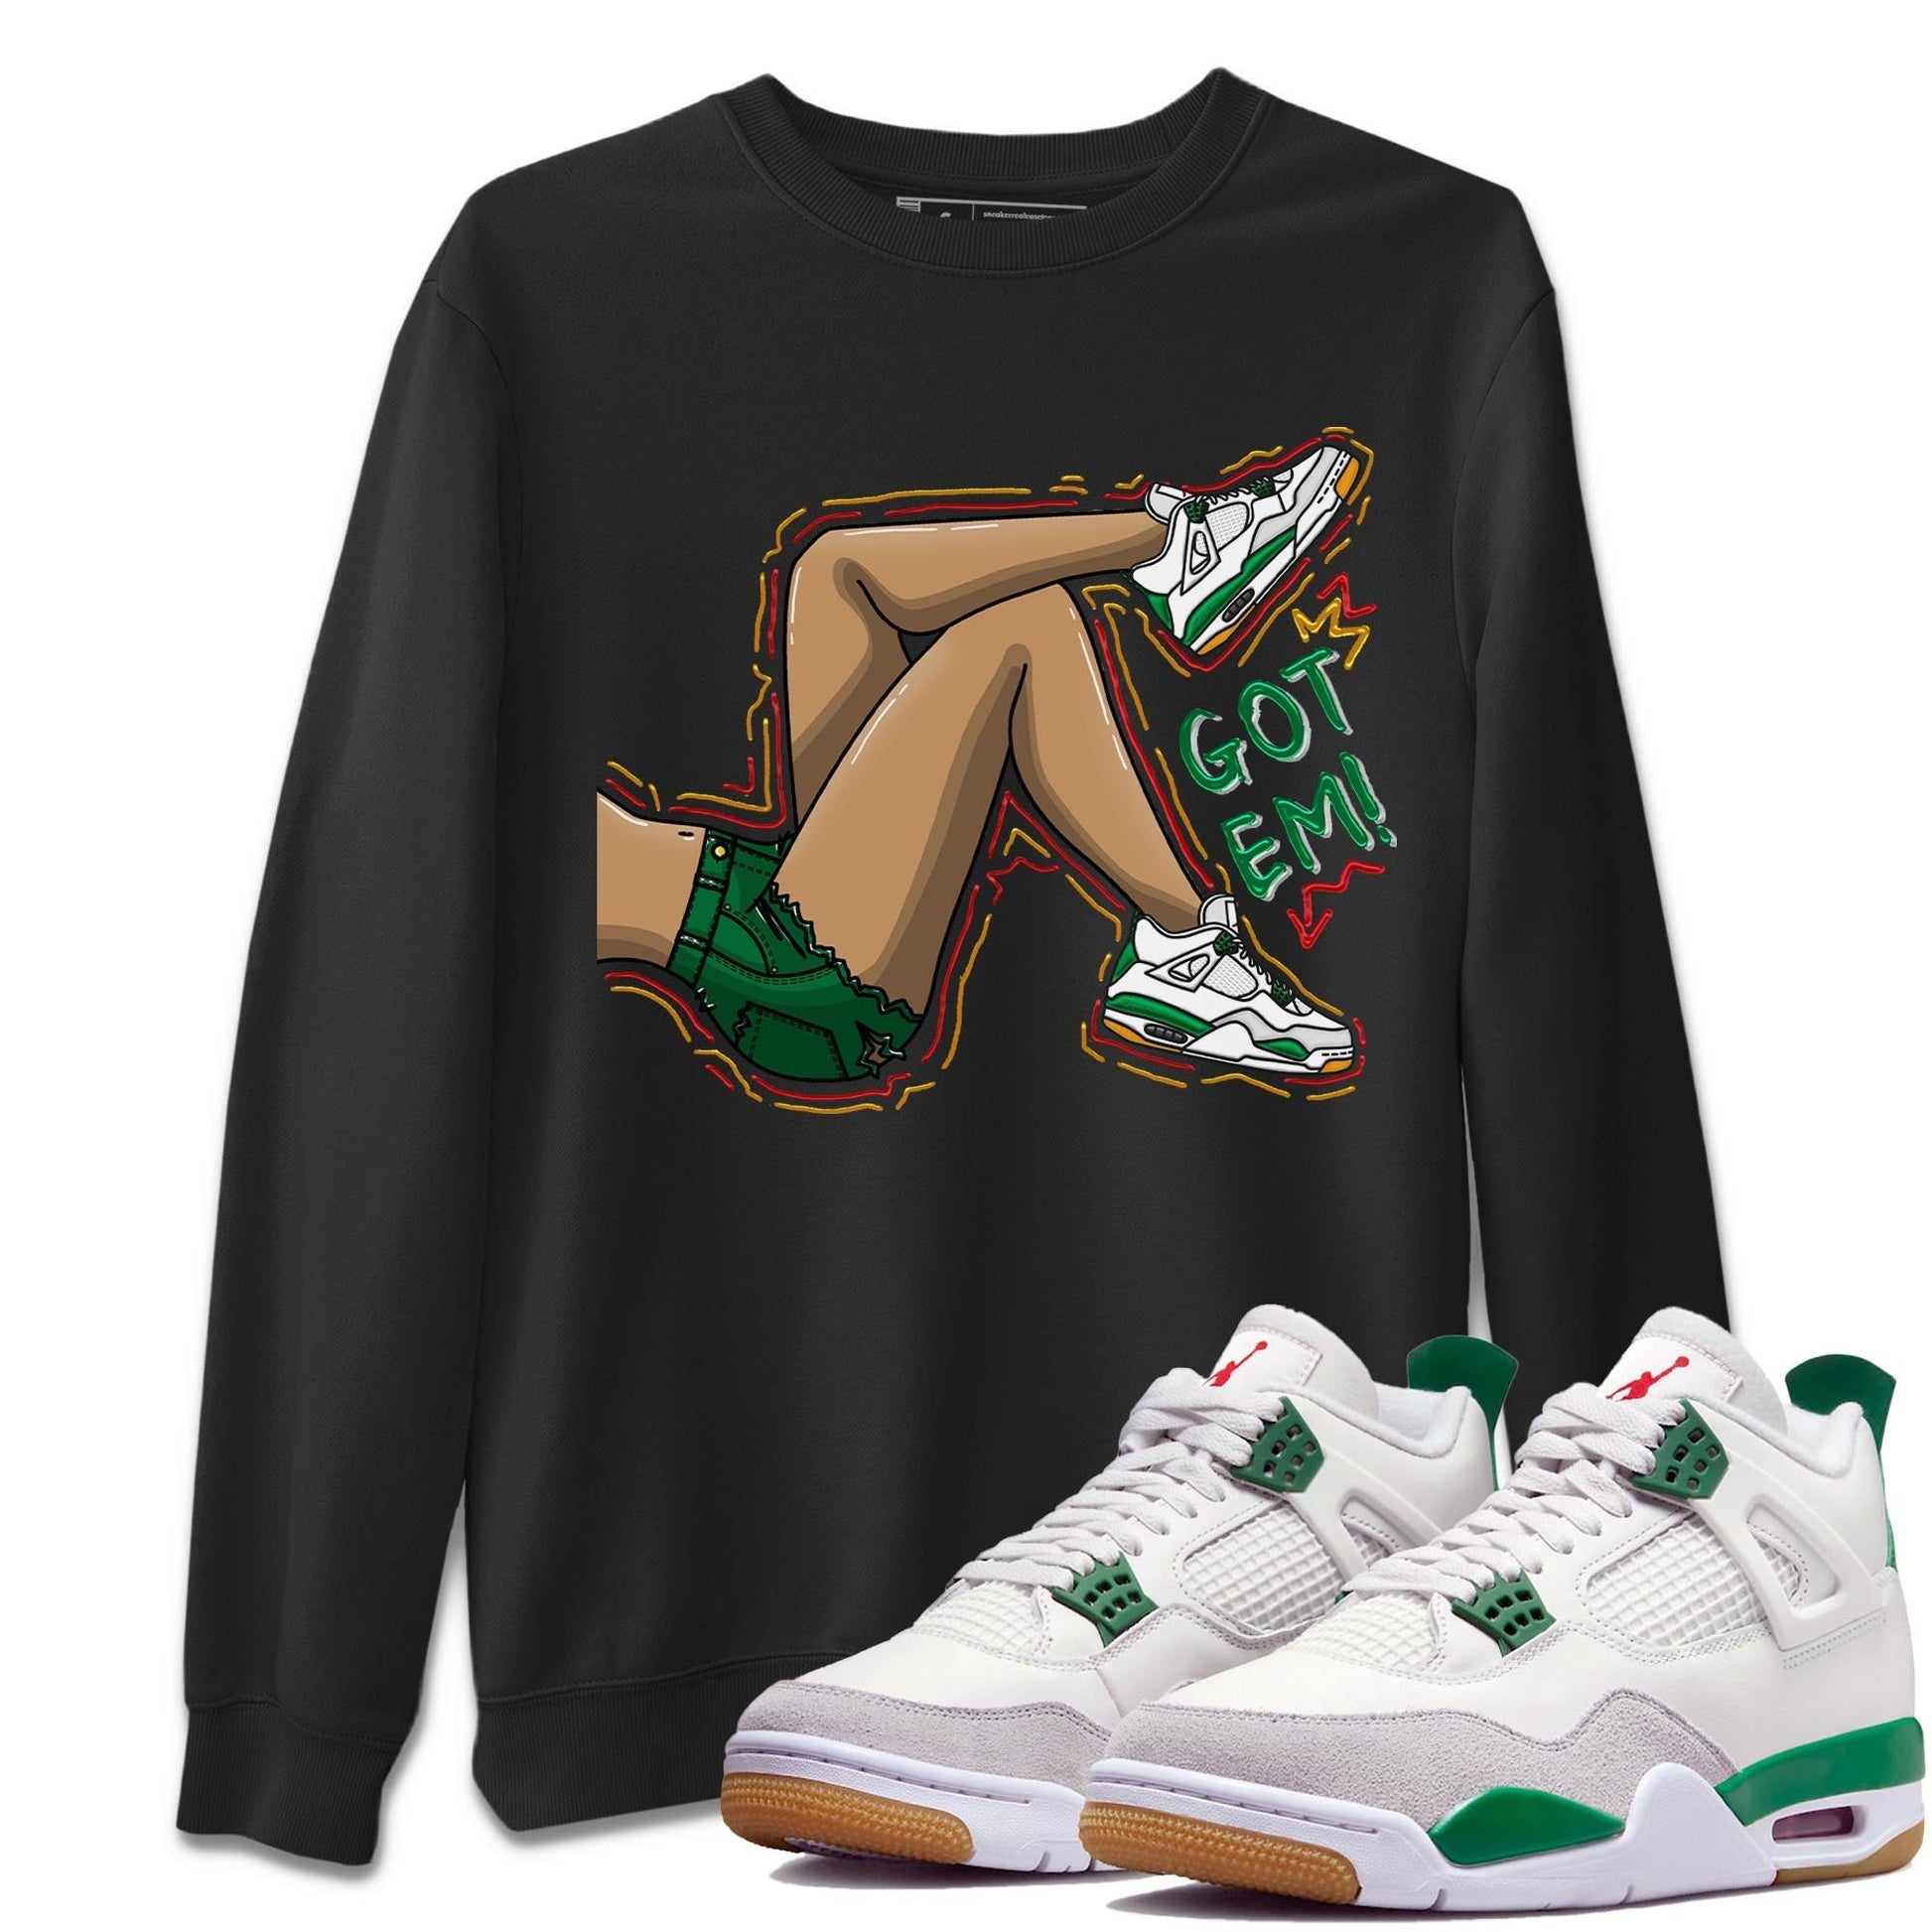 Jordan 4 Pine Green SB Sneaker Match Tees Got Em Legs Sneaker Tees 4s Pine Green Nike SB Sneaker Tees Sneaker Release Shirts Unisex Shirts Black 1